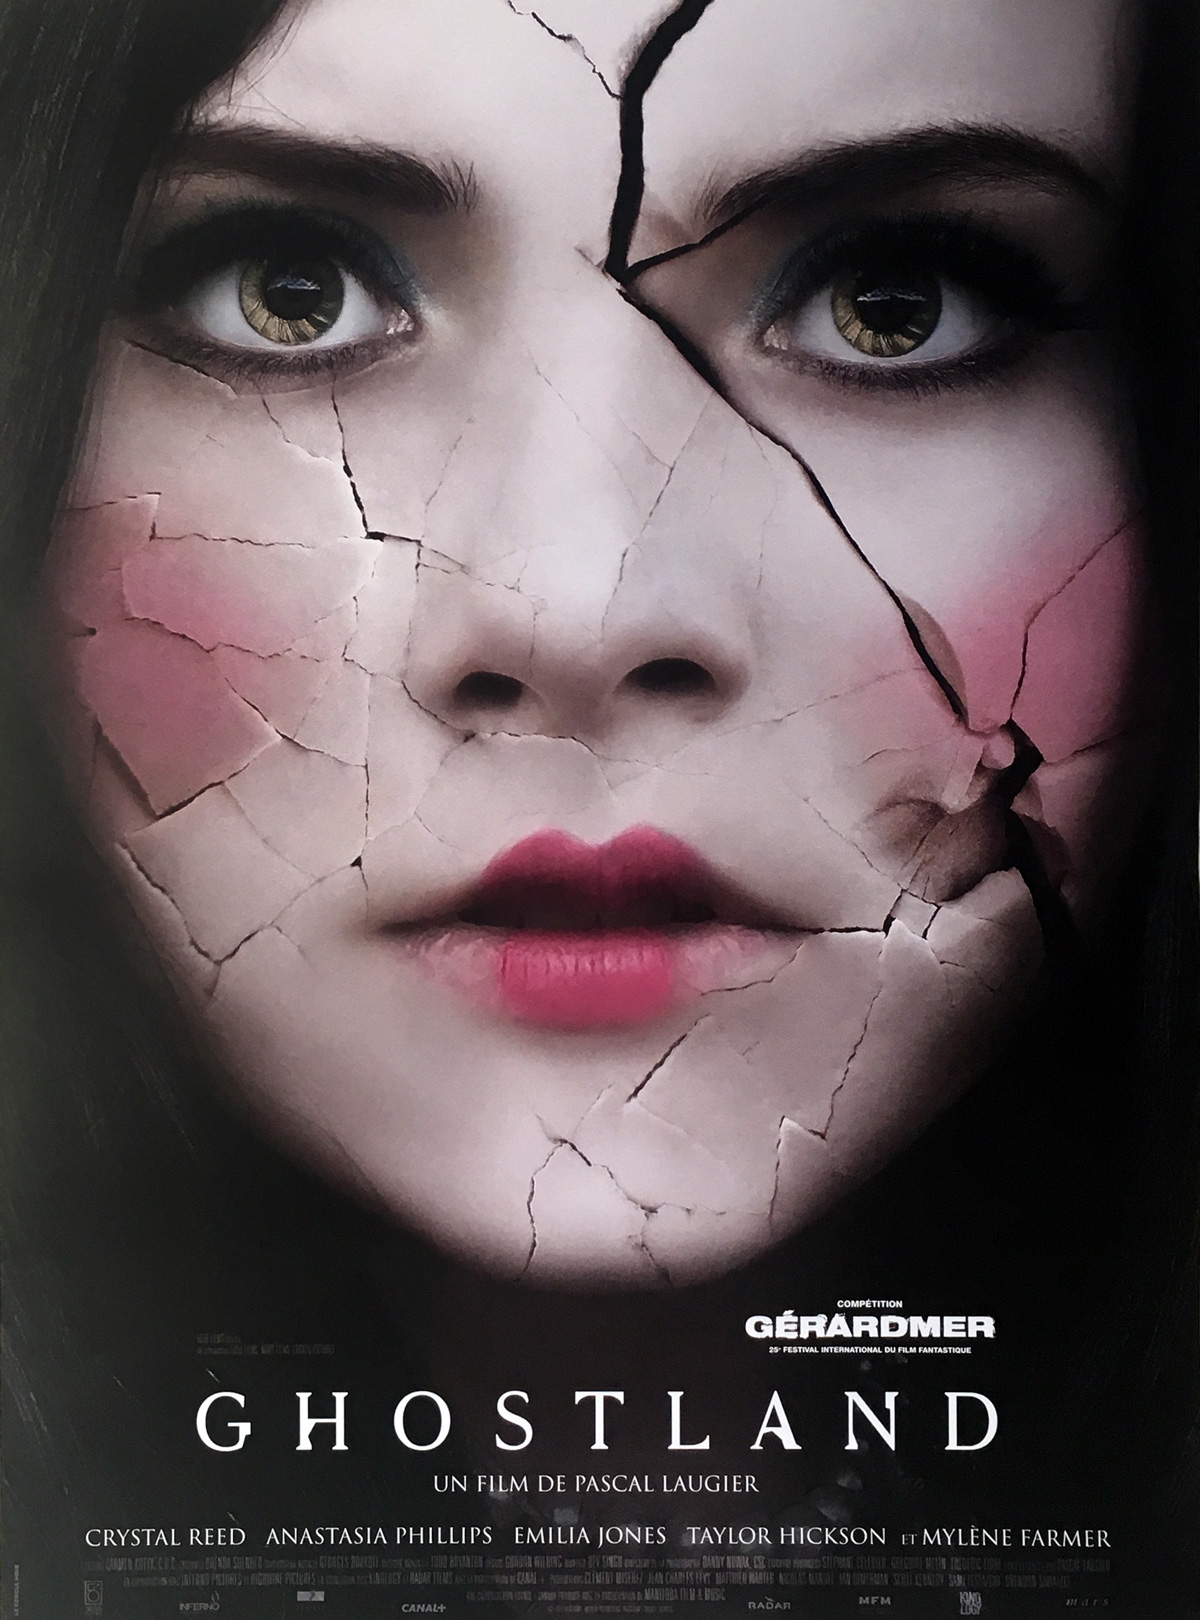 ghostland-movie-poster-15x21-in-2017-pascal-laugier-mylène-farmer.jpg